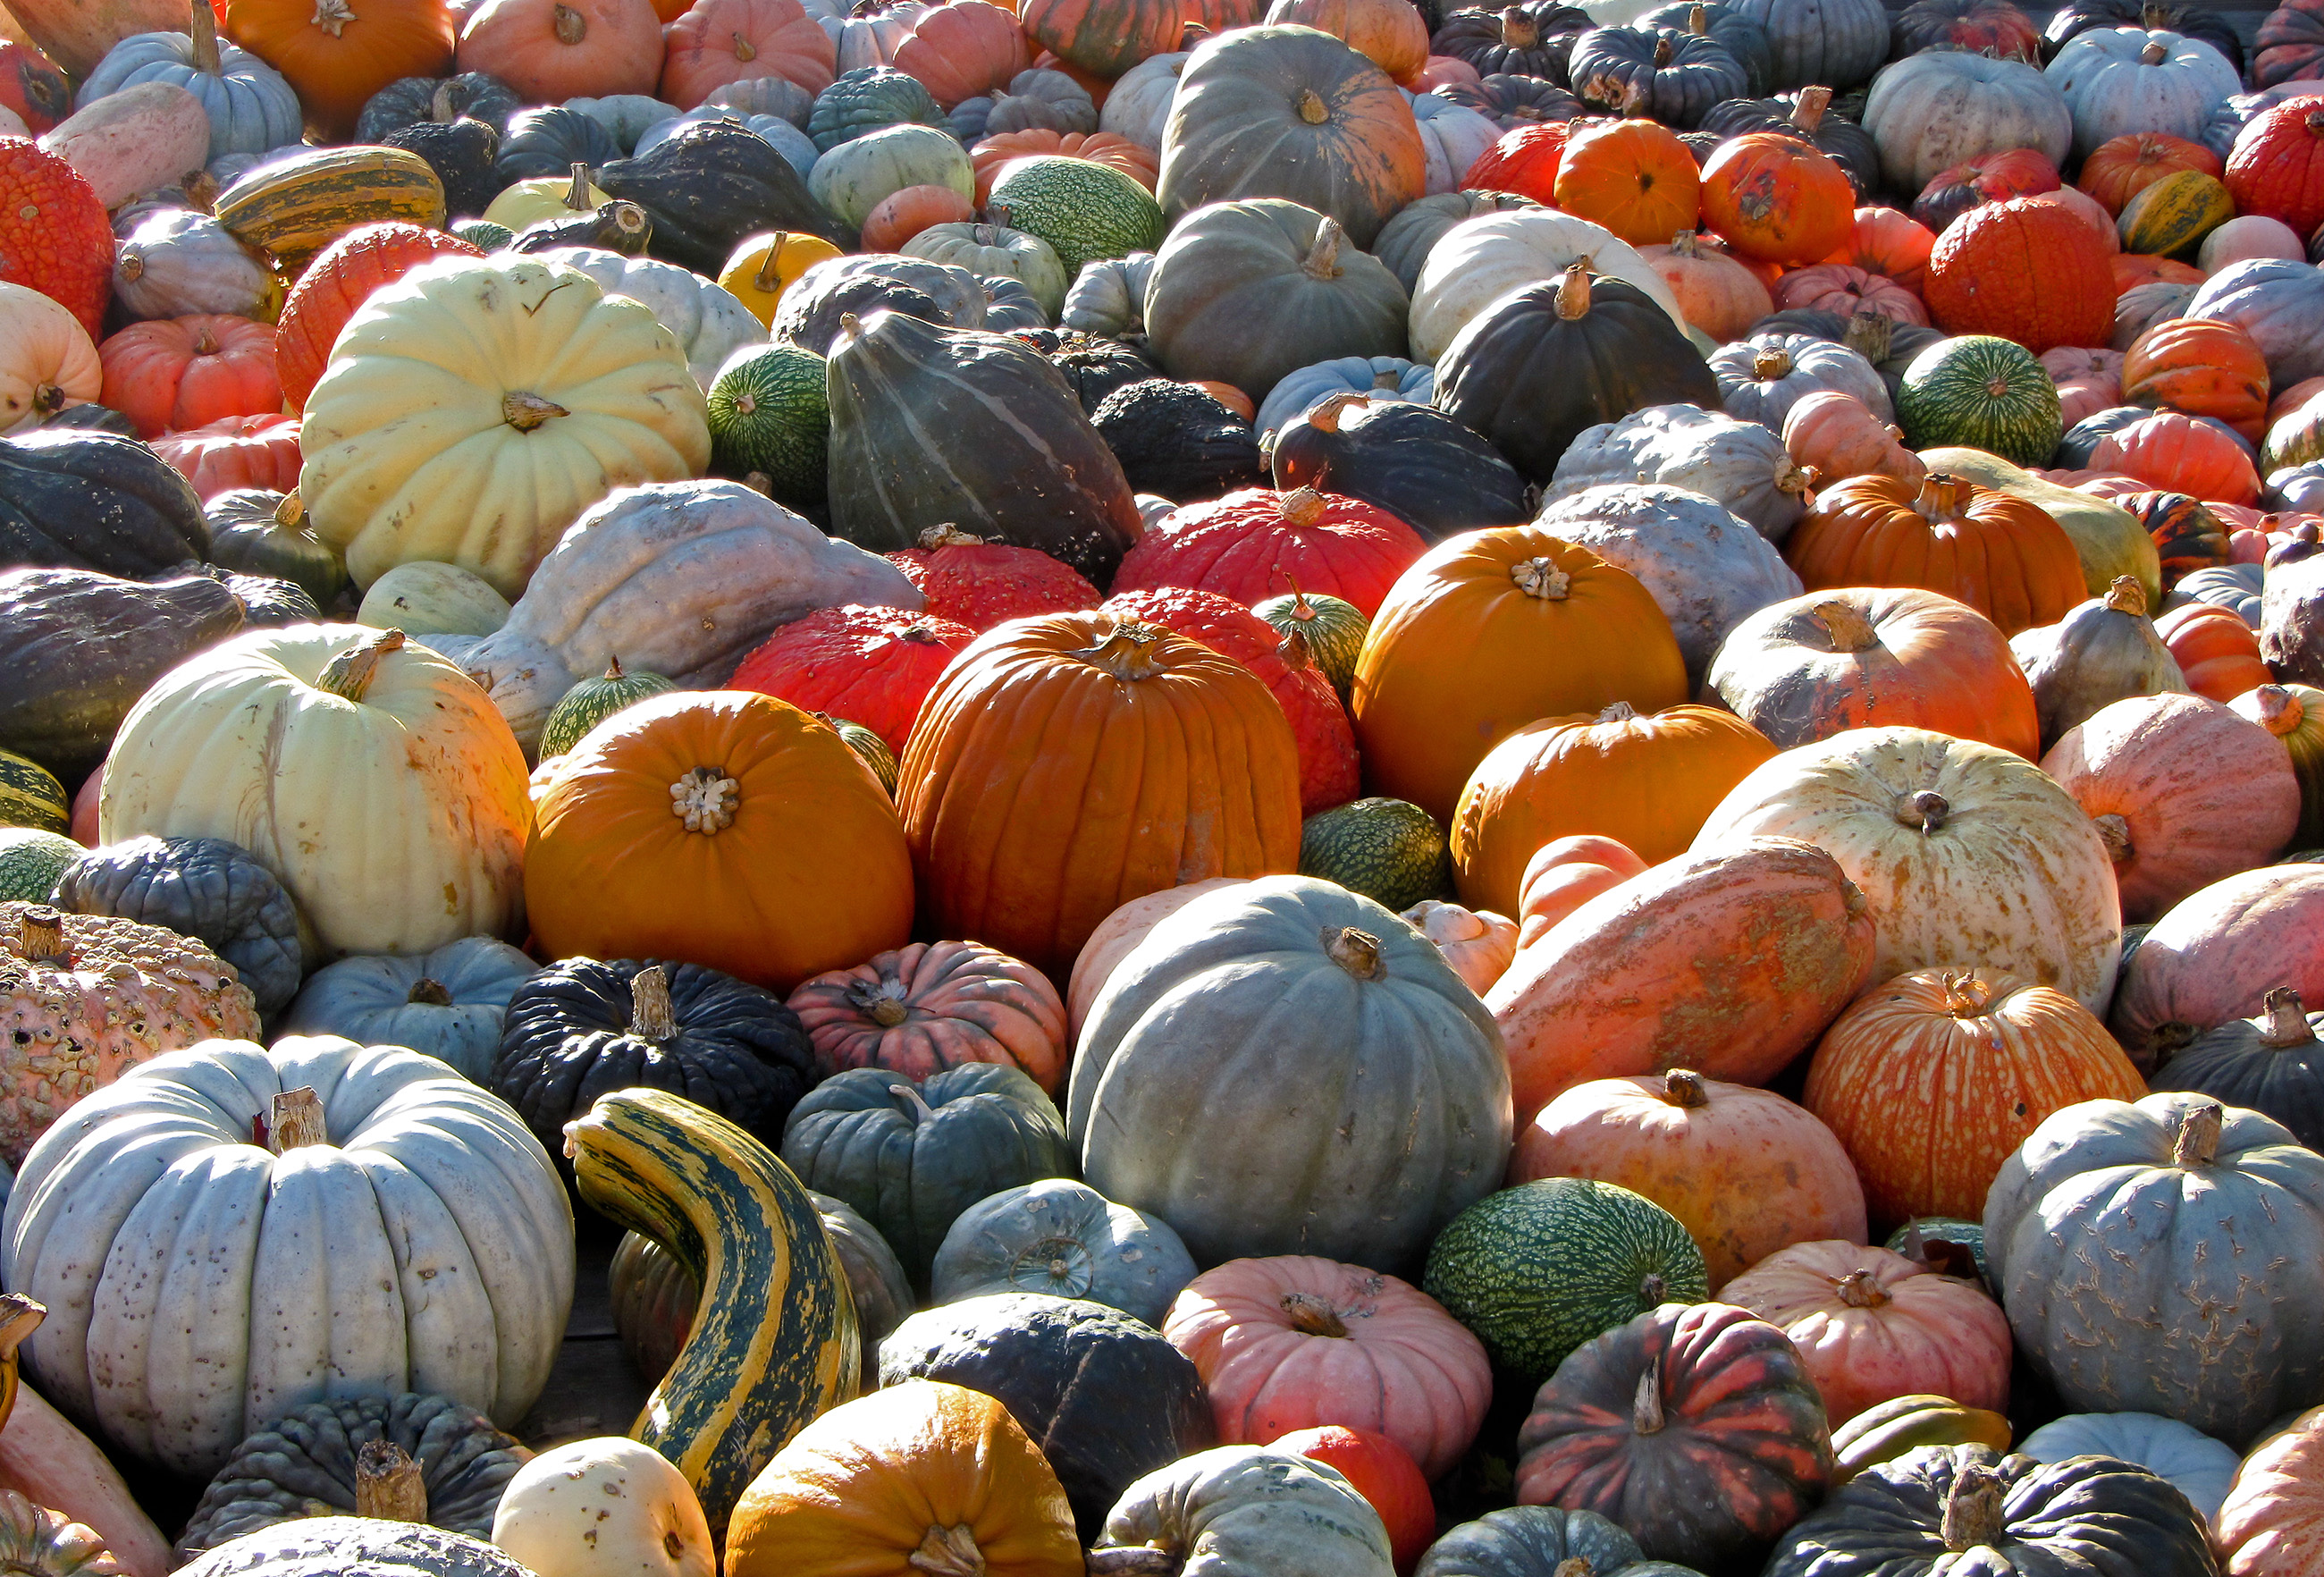 Plenty of pumpkins to inspire a Canadian Thanksgiving dinner